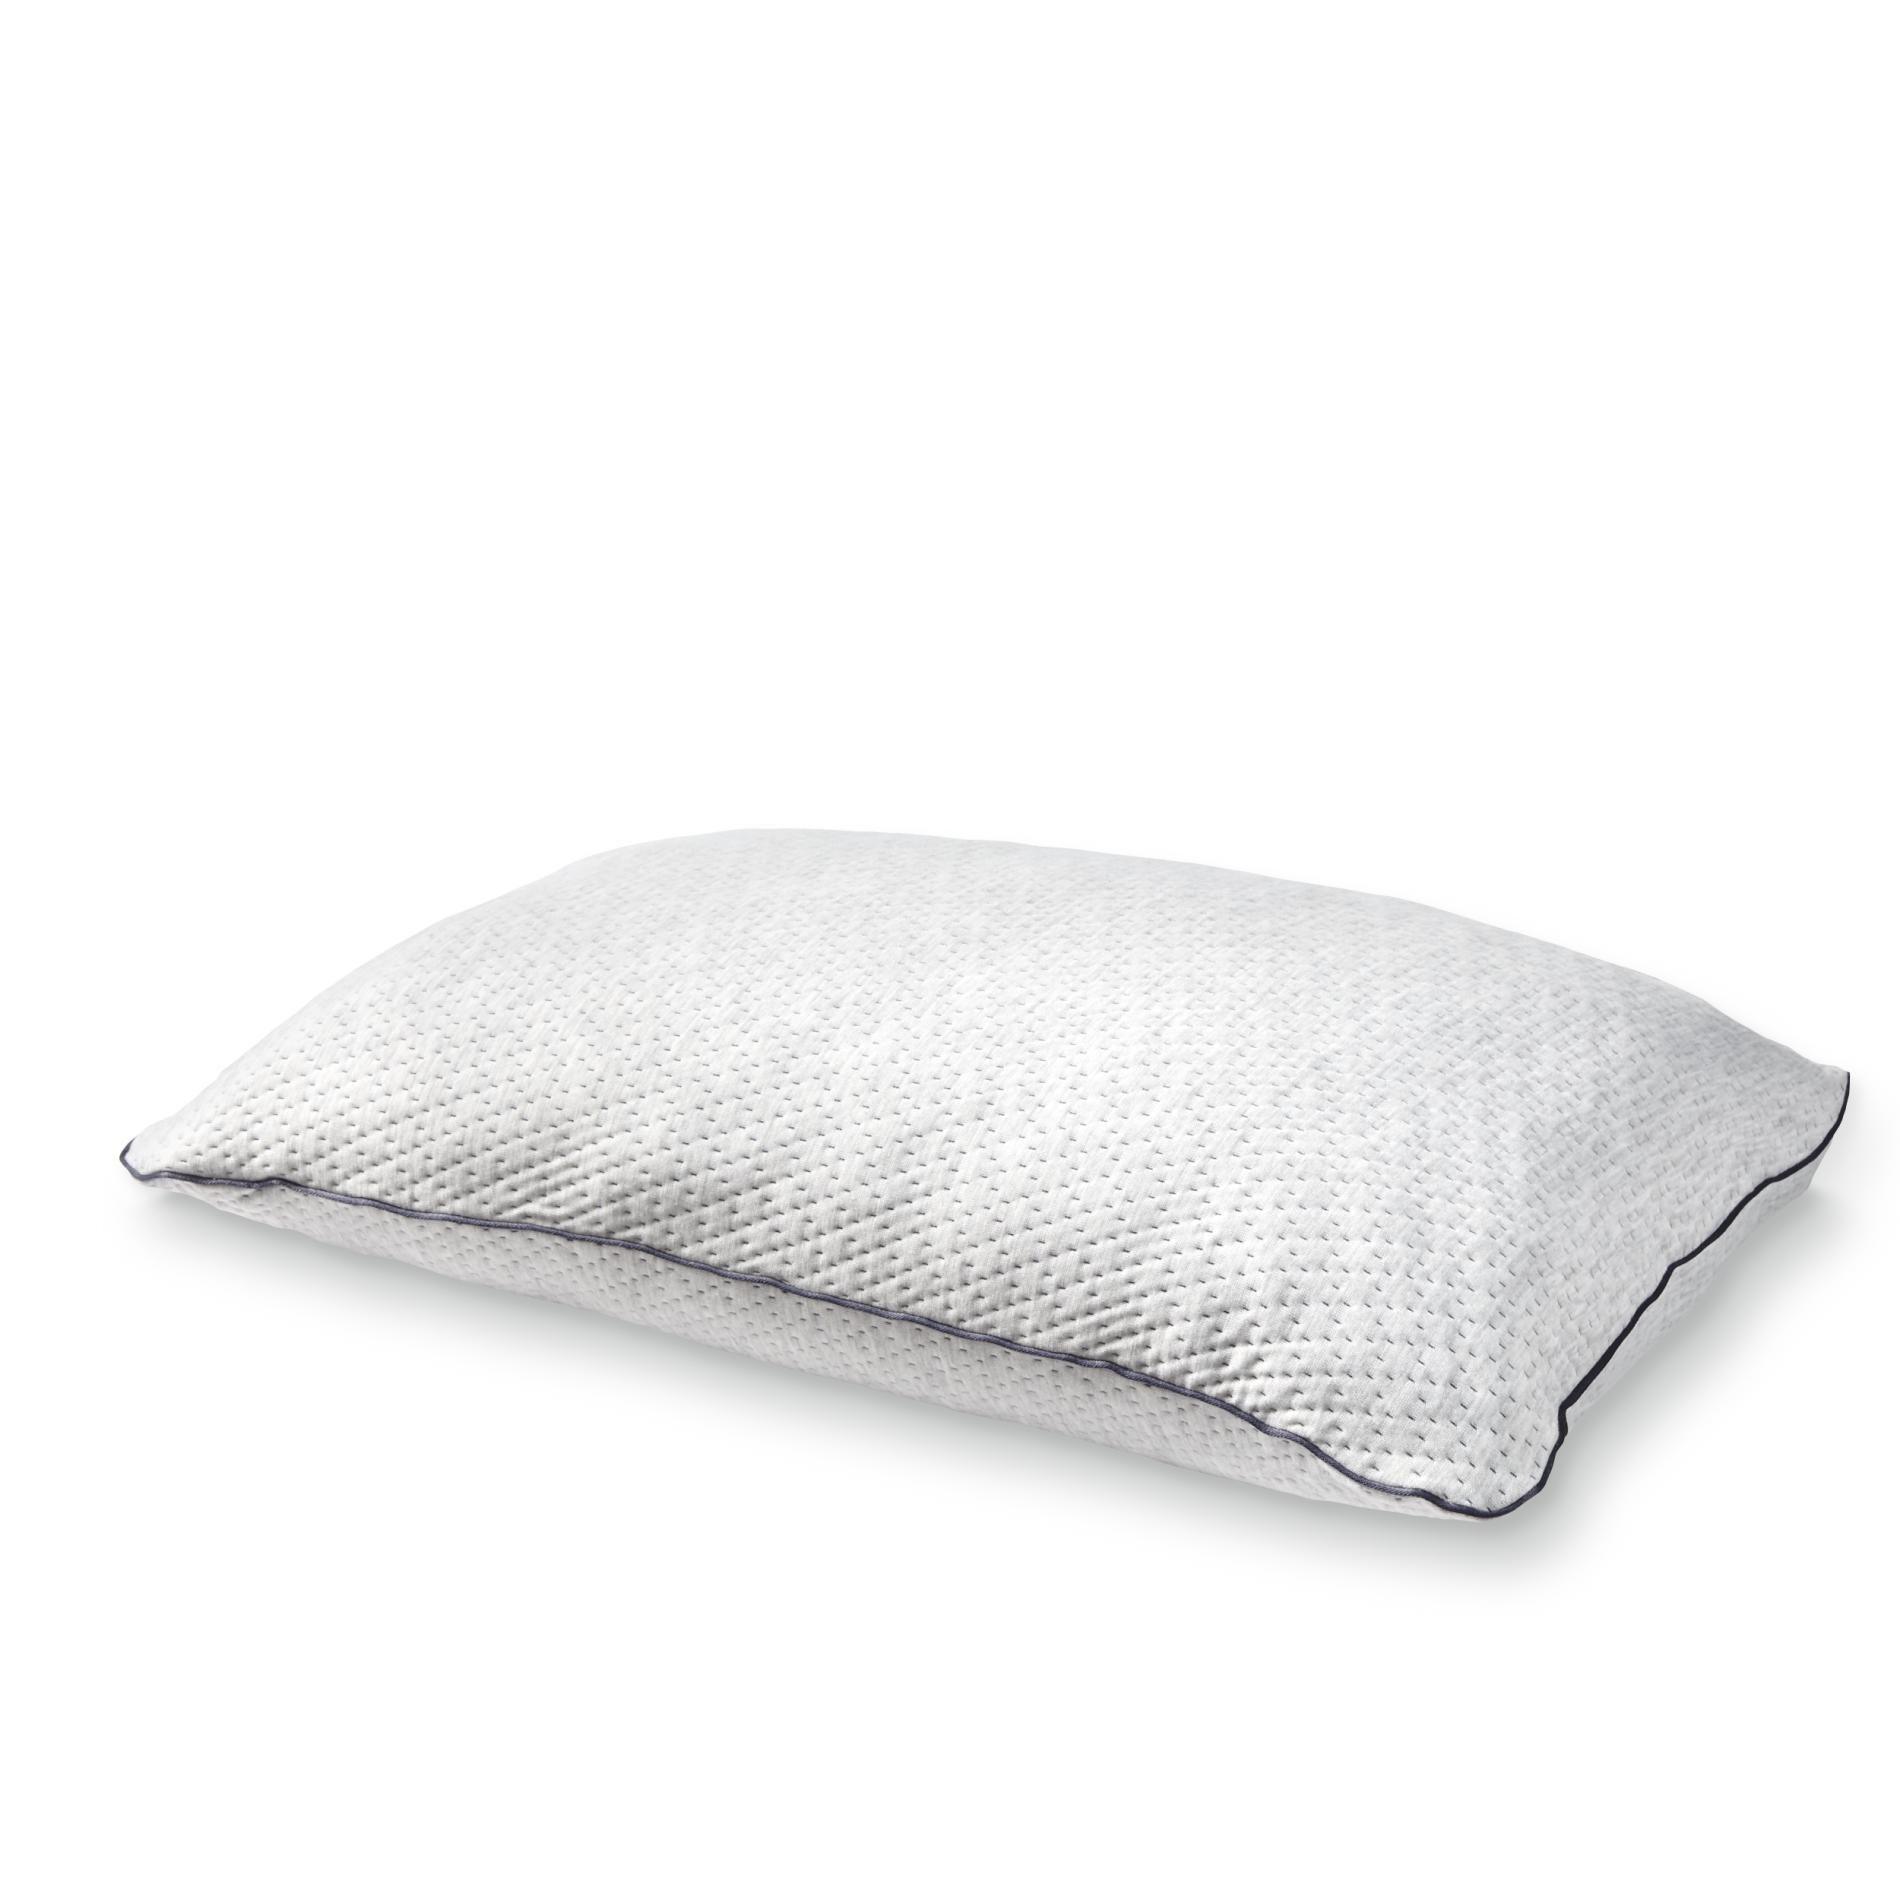 cervical pillow kmart